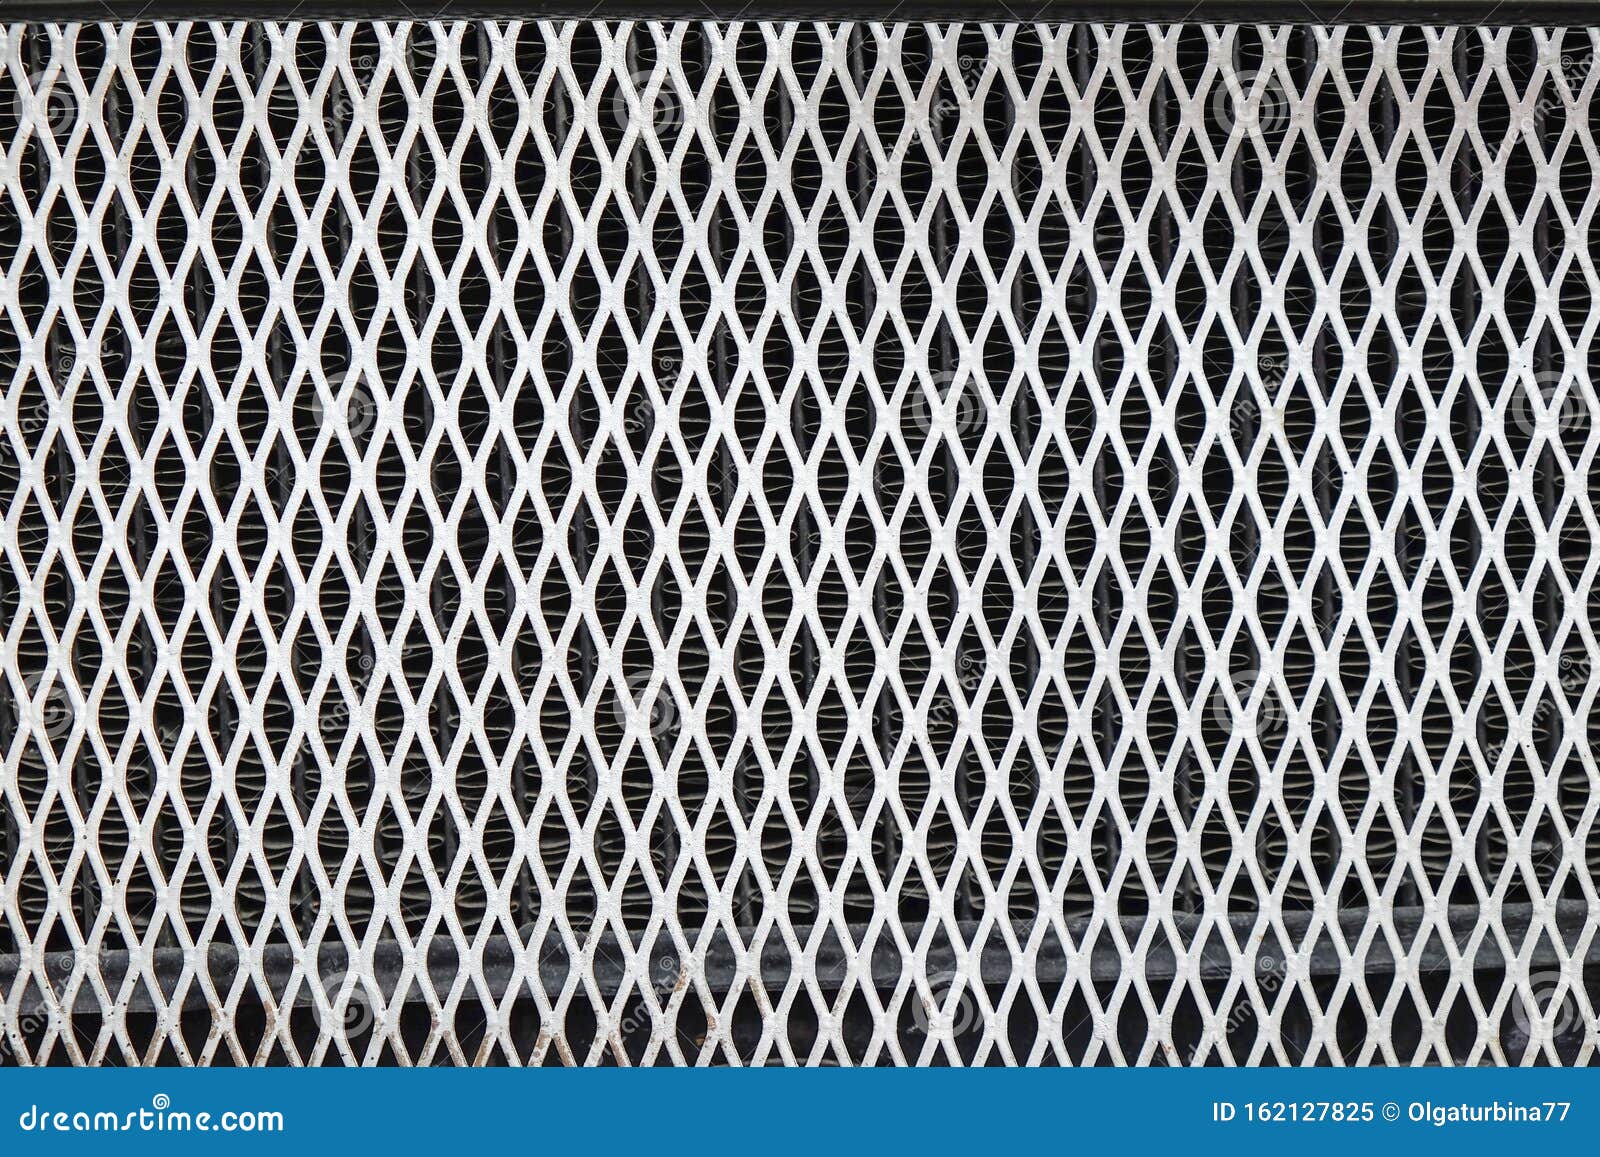 metallic diamond-d mesh of grill of retro luxury rarity car pattern